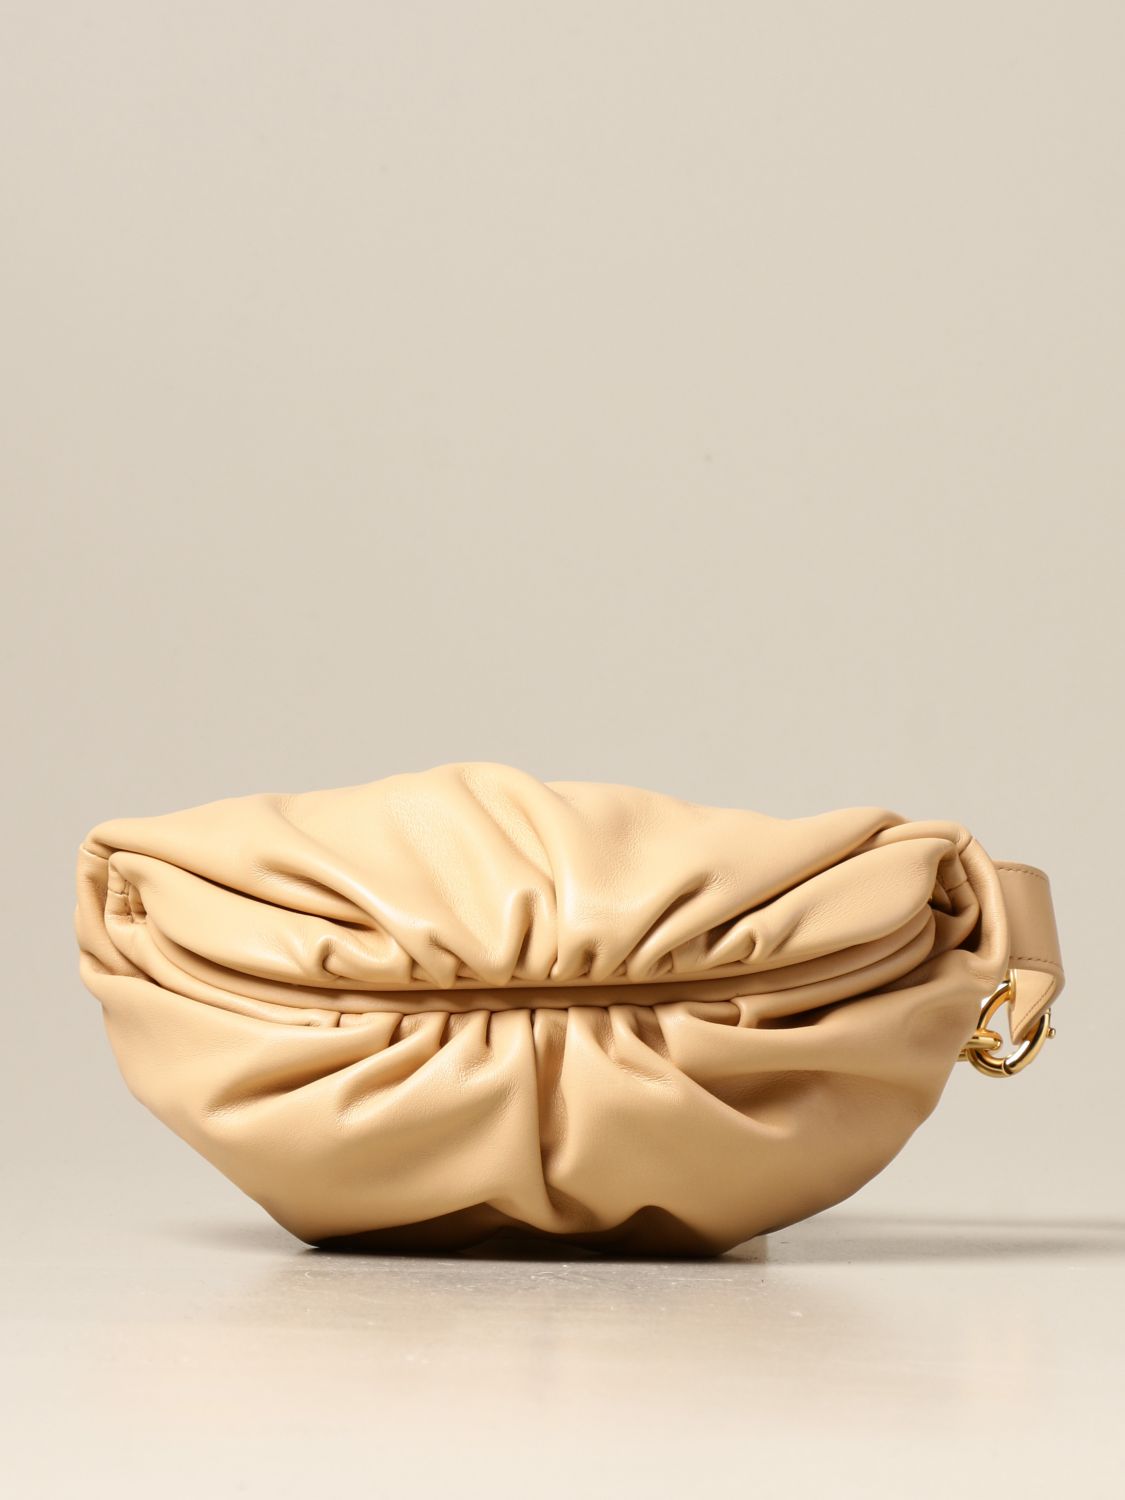 BOTTEGA VENETA: The pouch mini bag in nappa leather - Gold  Bottega Veneta  belt bag 651445 VCP41 online at